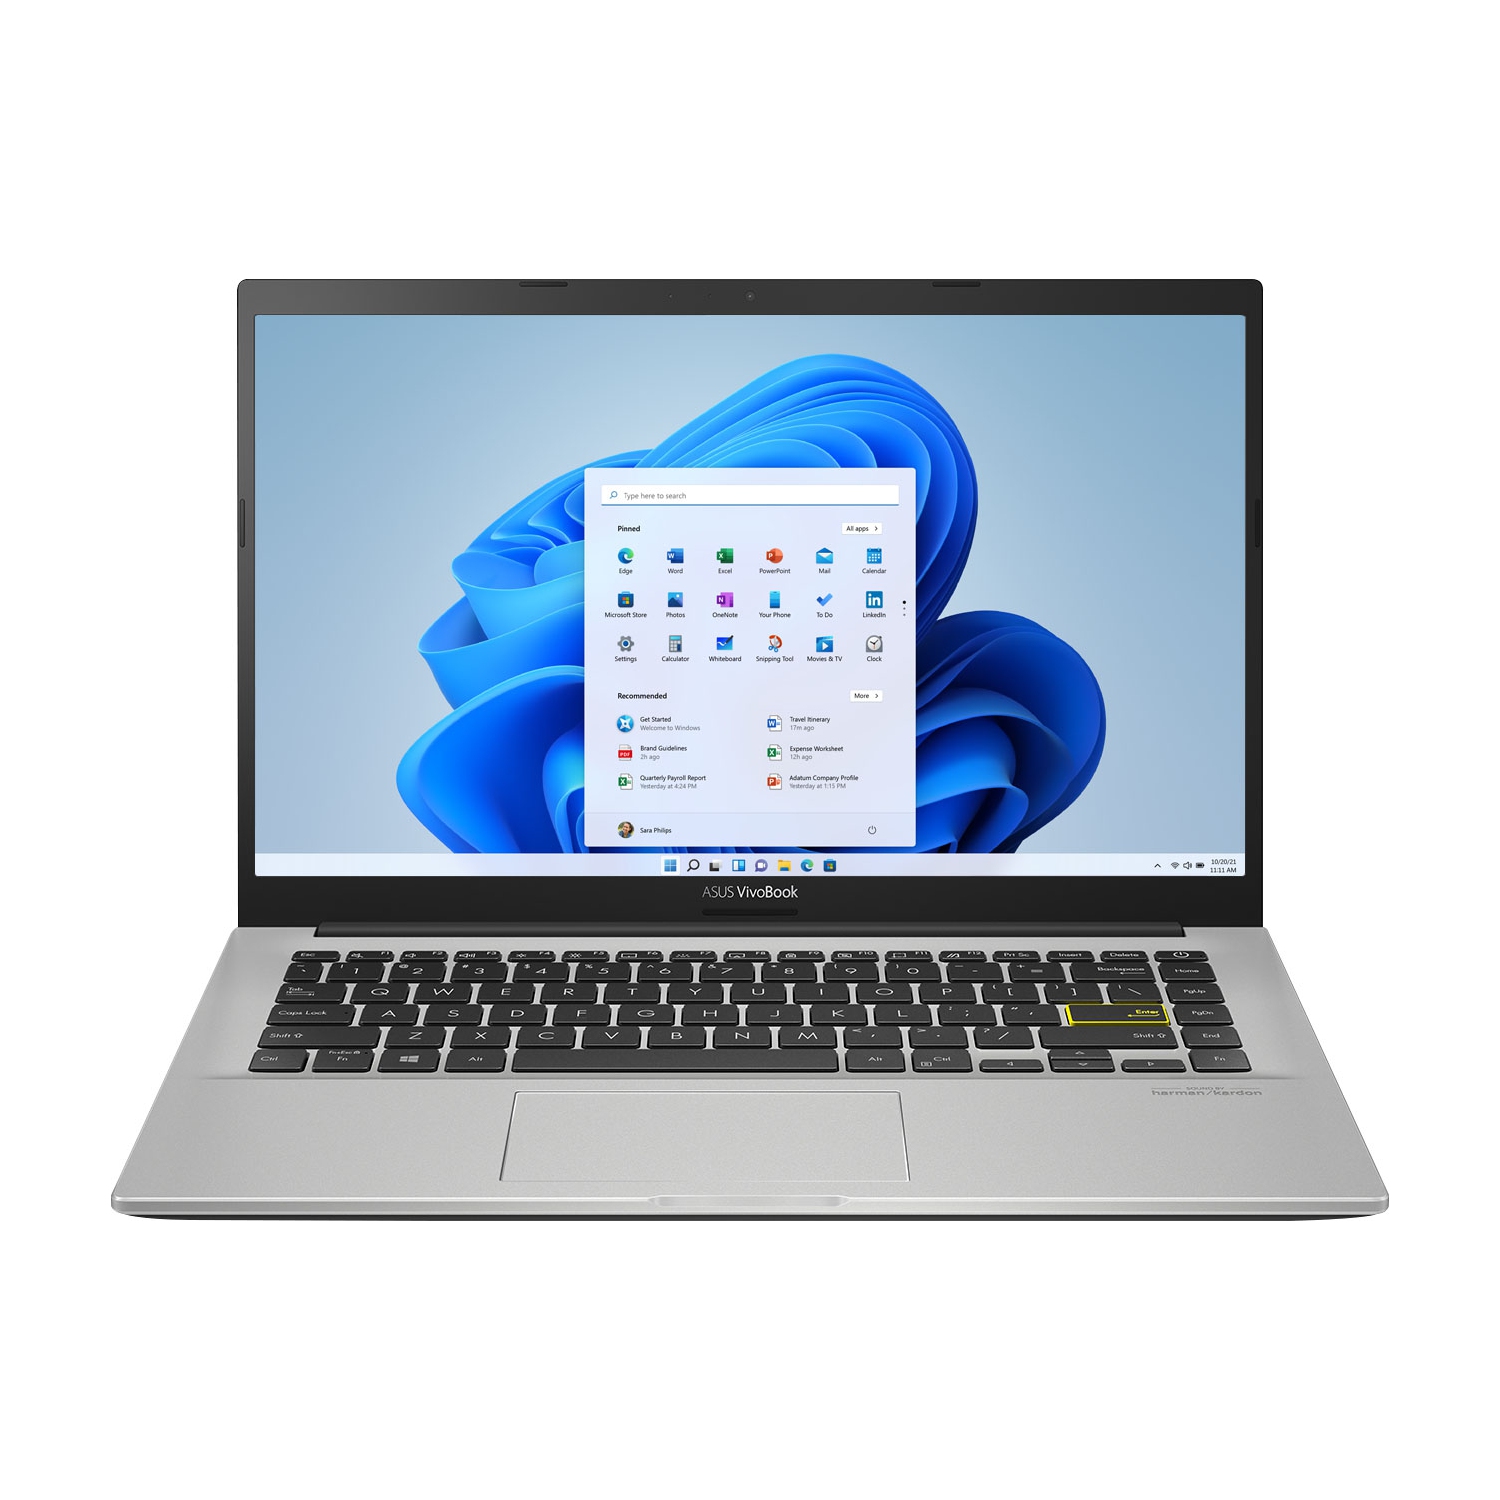 Asus Vivobook 14" Laptop (Intel Core i3-1005G1, 4GB RAM, 128GB SSD, Windows 10) - Dreamy White (X413JA- 211.VBWB)